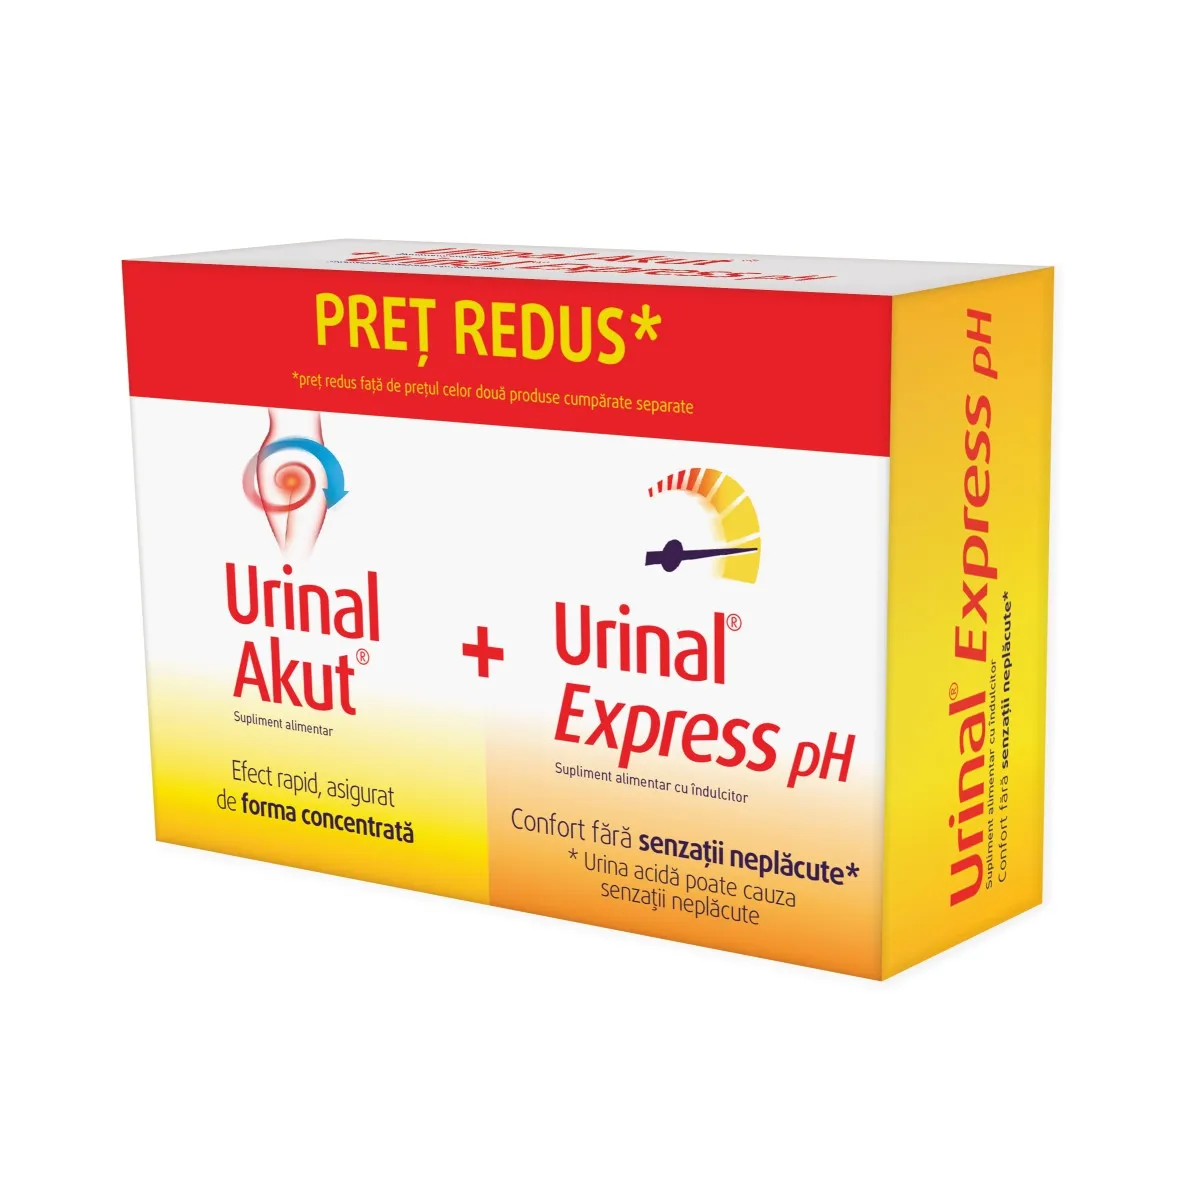 Urinal Akut Idelyn 10 tablete + Urinal Express pH 6 plicuri, Walmark